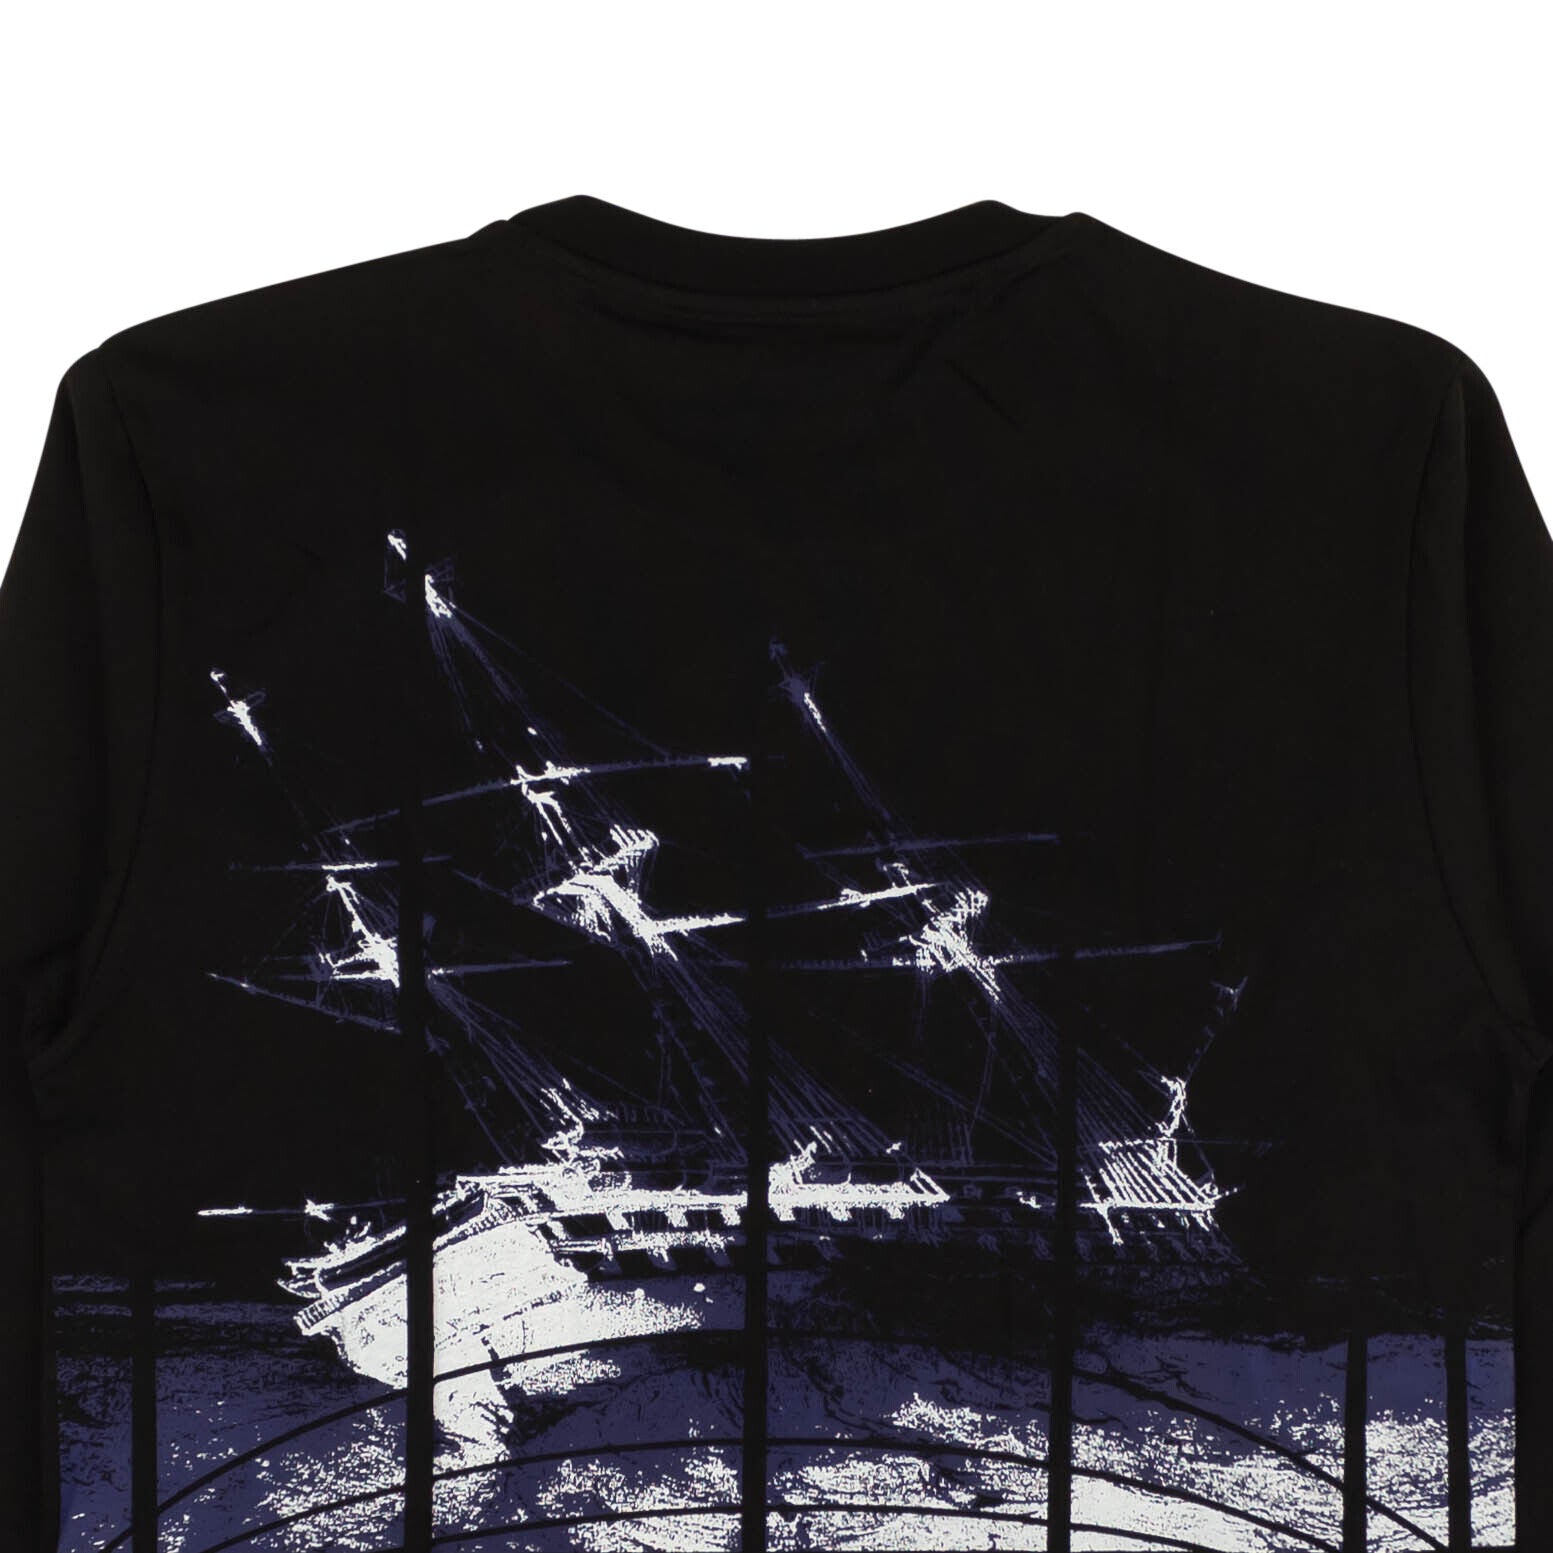 Hideaway Porto Cervo Long Sleeve T-Shirt - Black